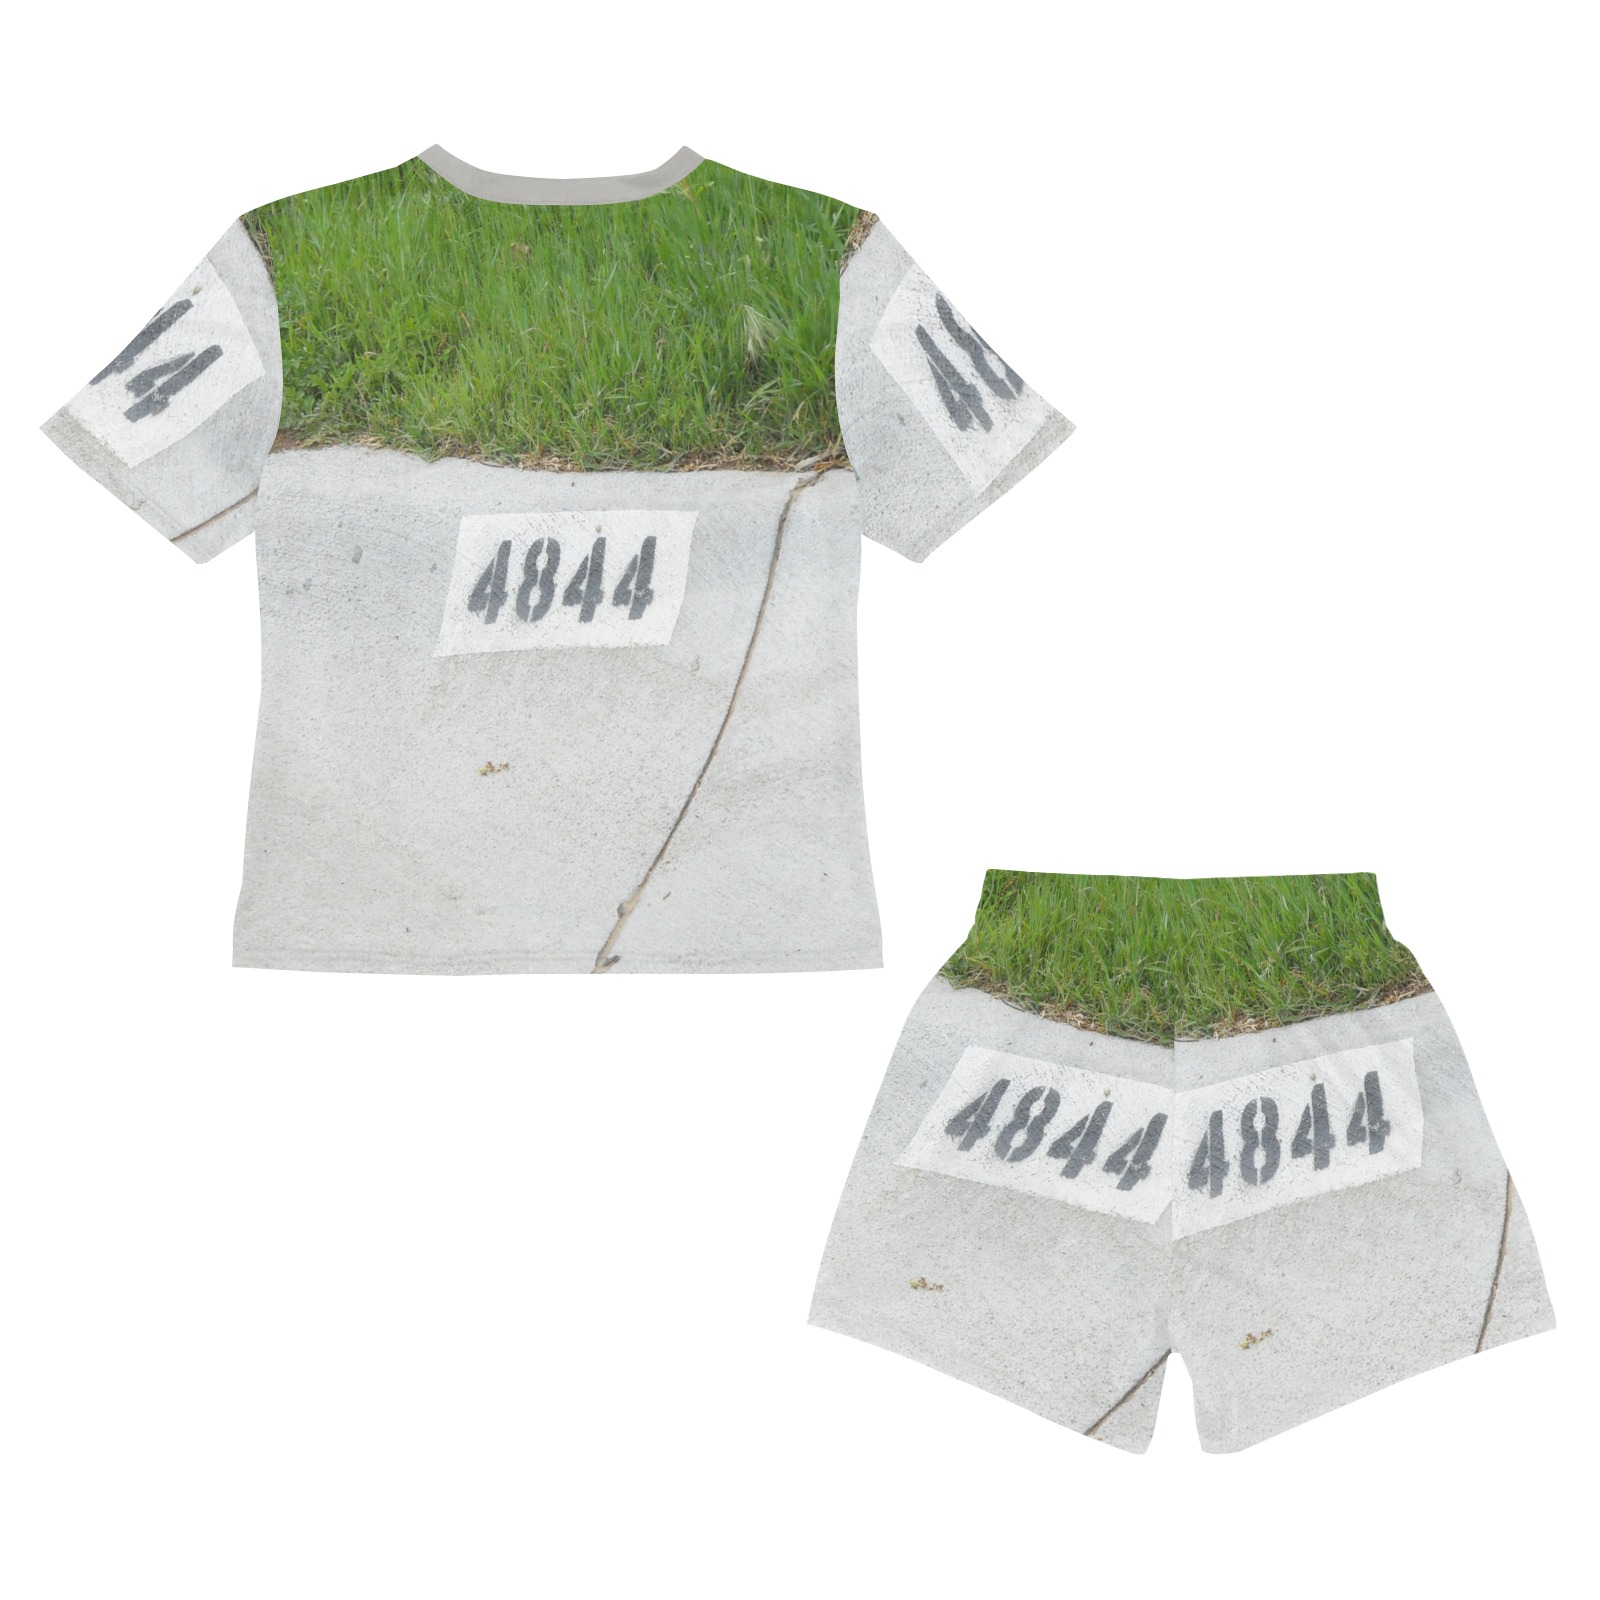 Street Number 4844 with Tan Collar Little Boys' Short Pajama Set